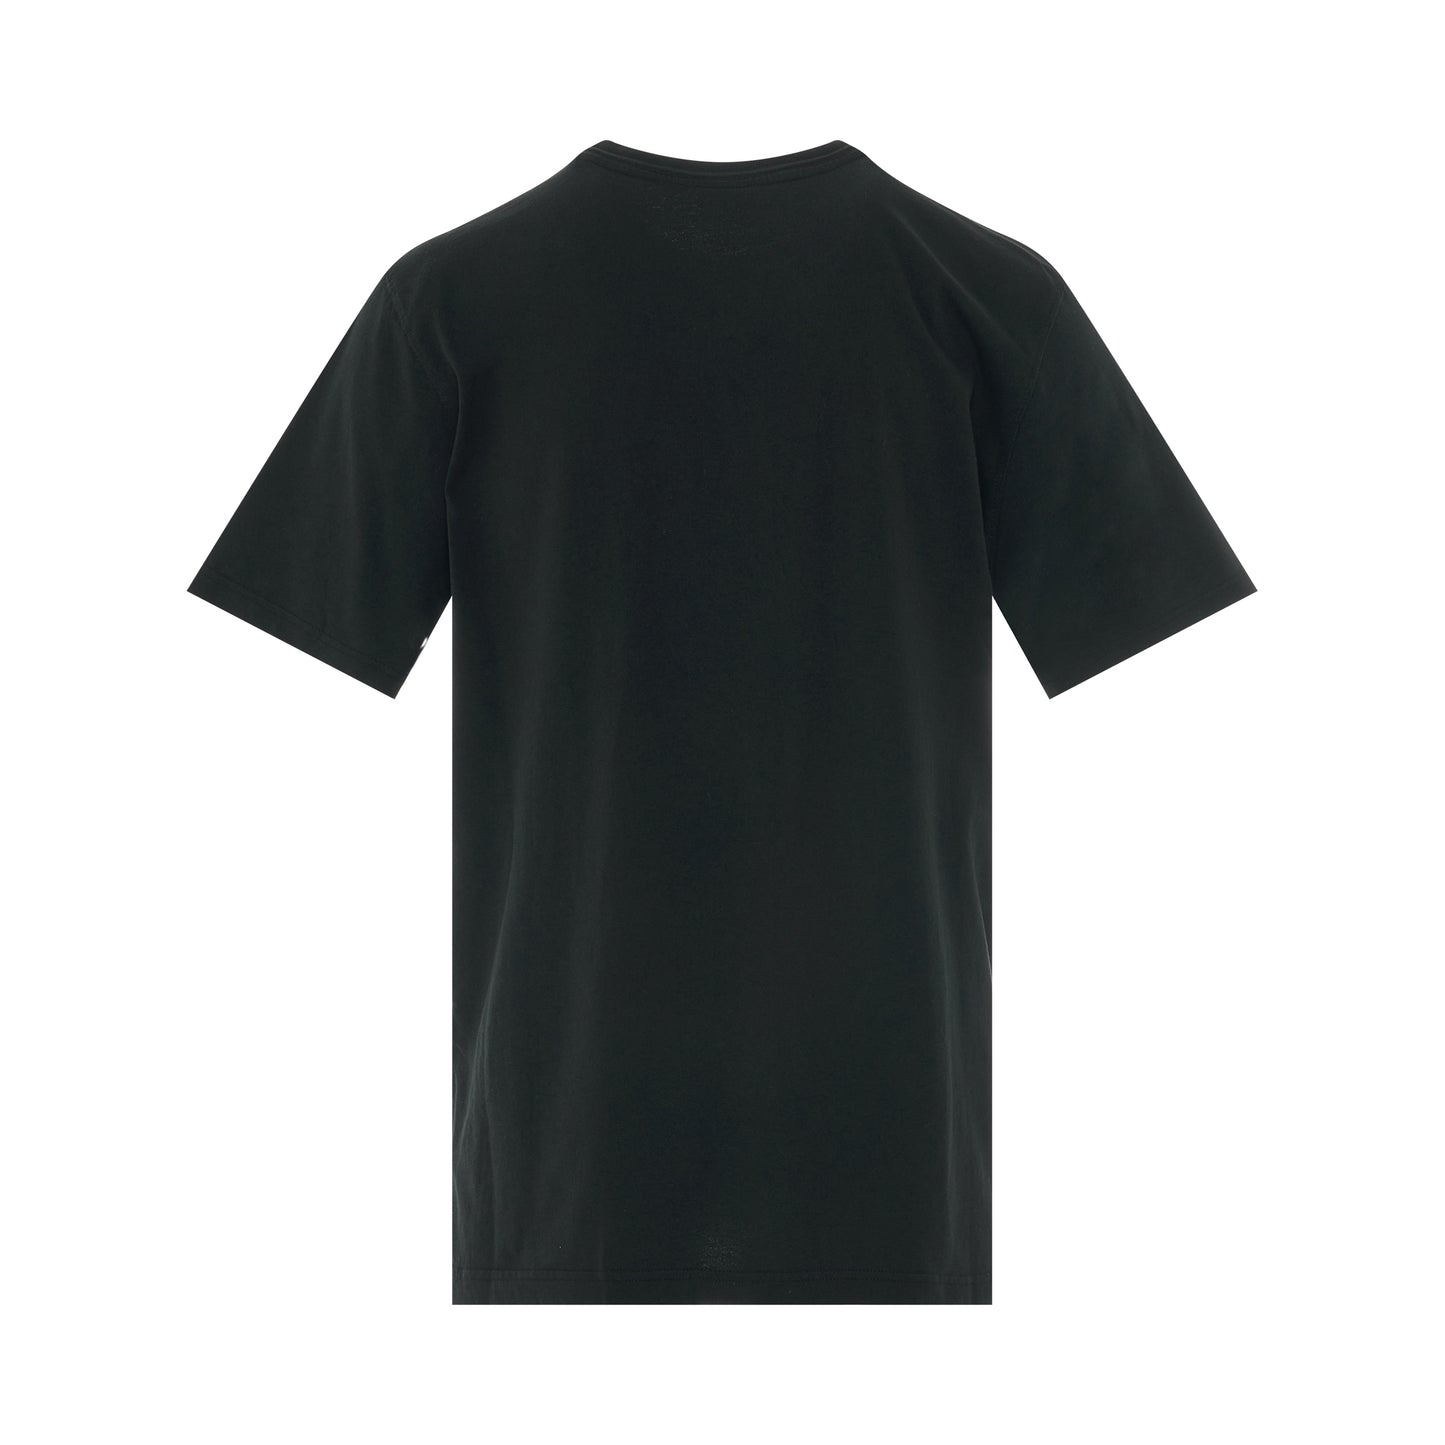 Heron BW Oversized T-Shirt in Black